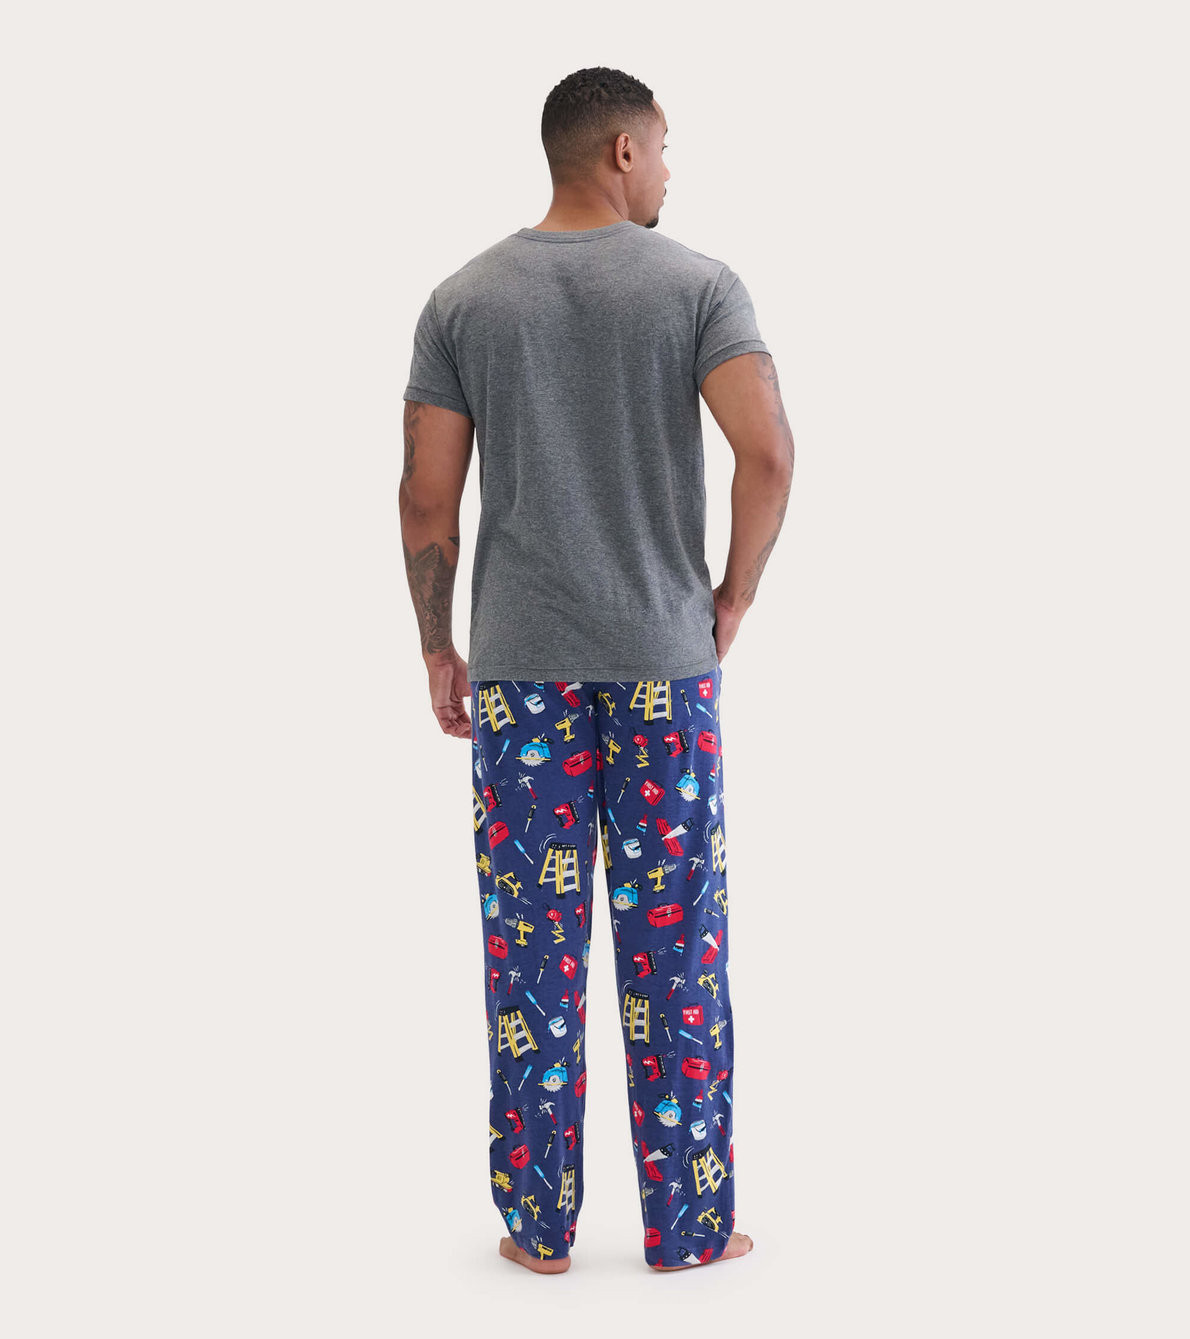 View larger image of Handyman Men's Jersey Pajama Pants